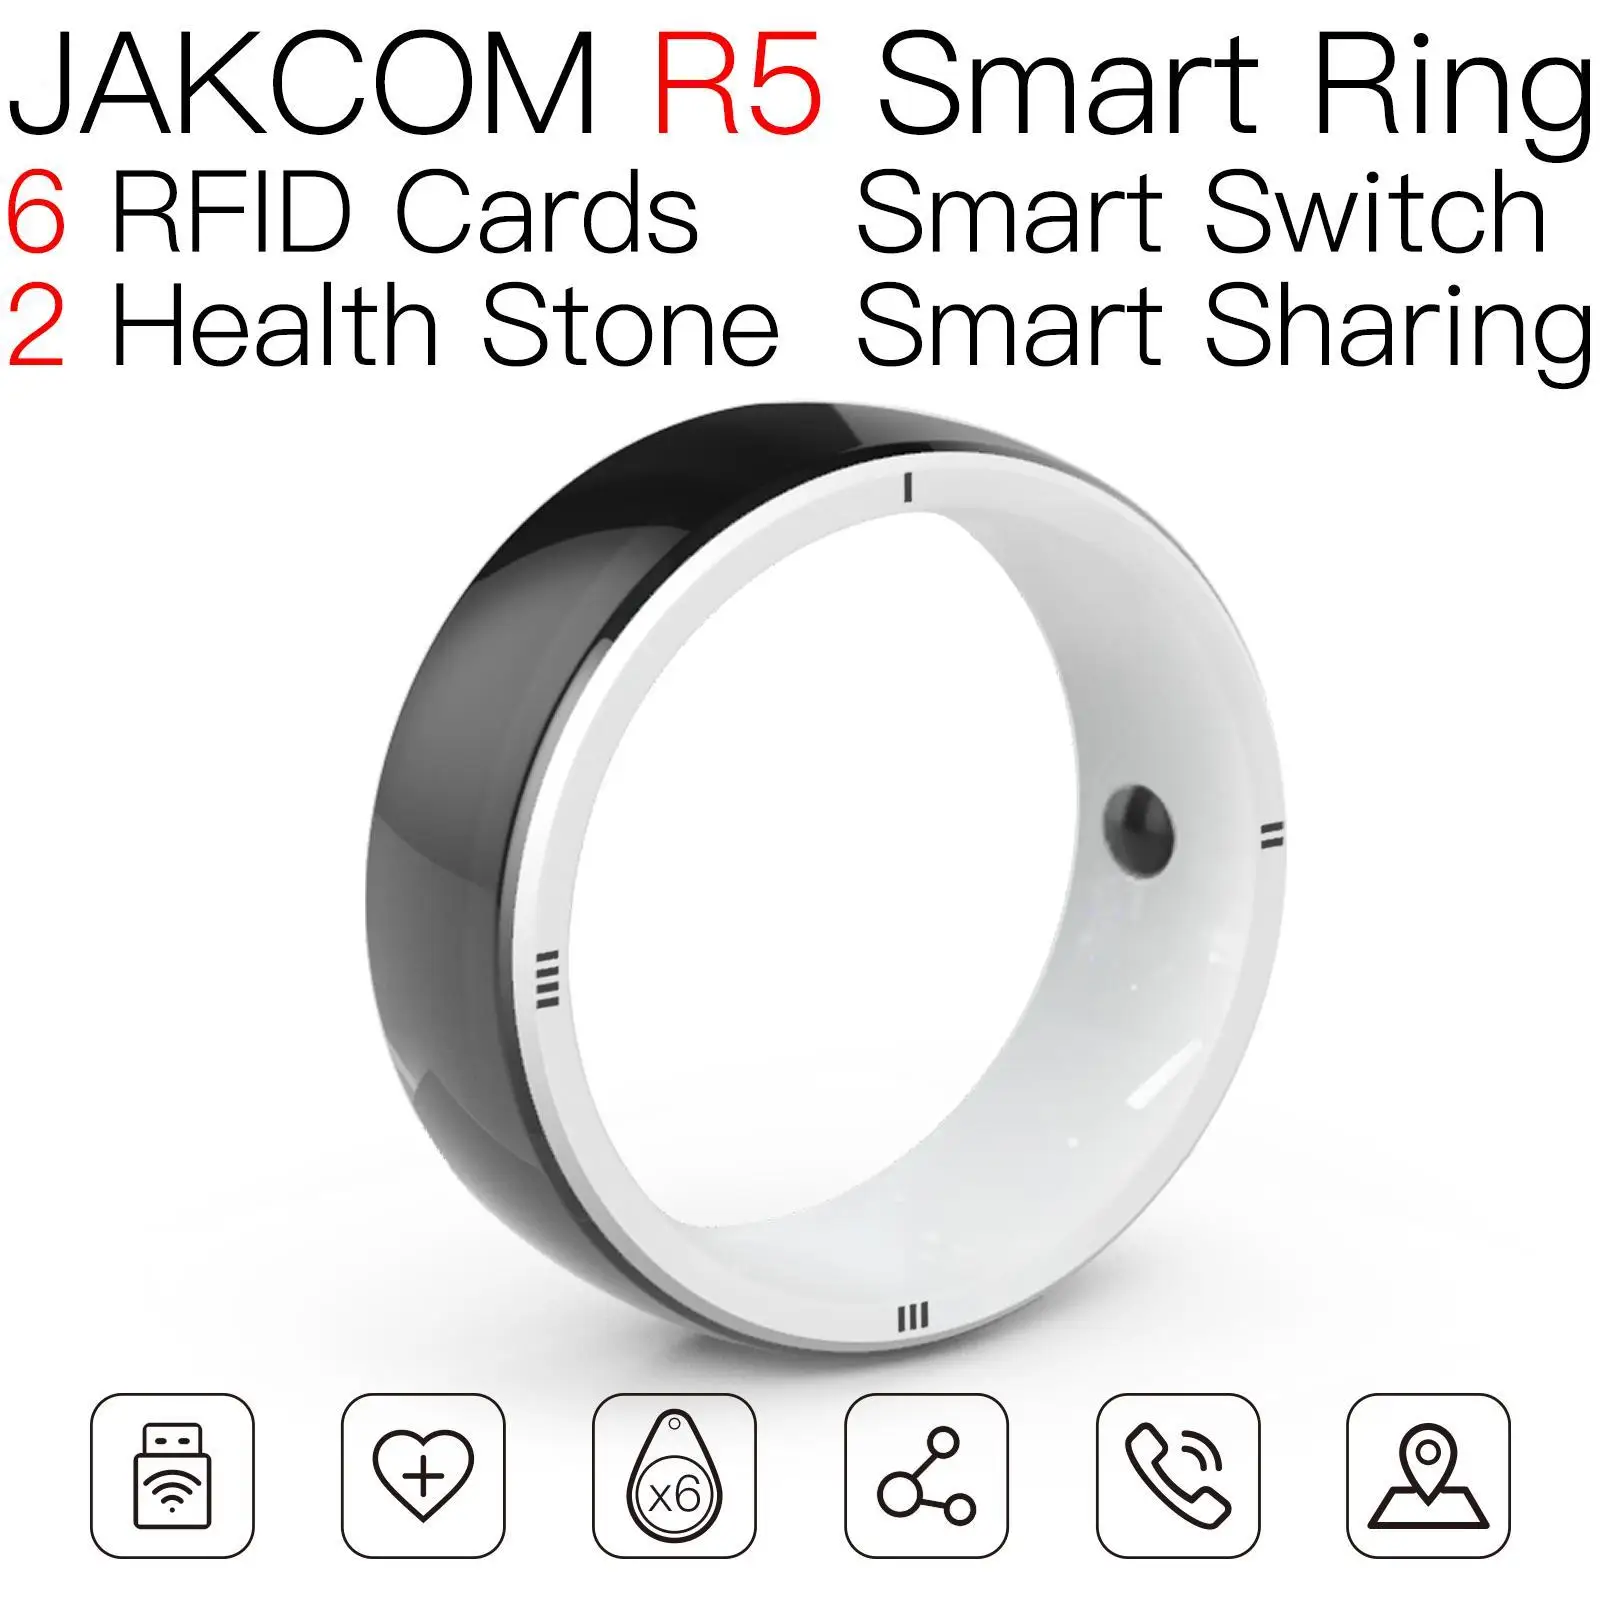 

JAKCOM R5 Smart Ring Newer than tag hueur watch office licence crossing nook miles nfc tags waterproof ntag215 100 pcs